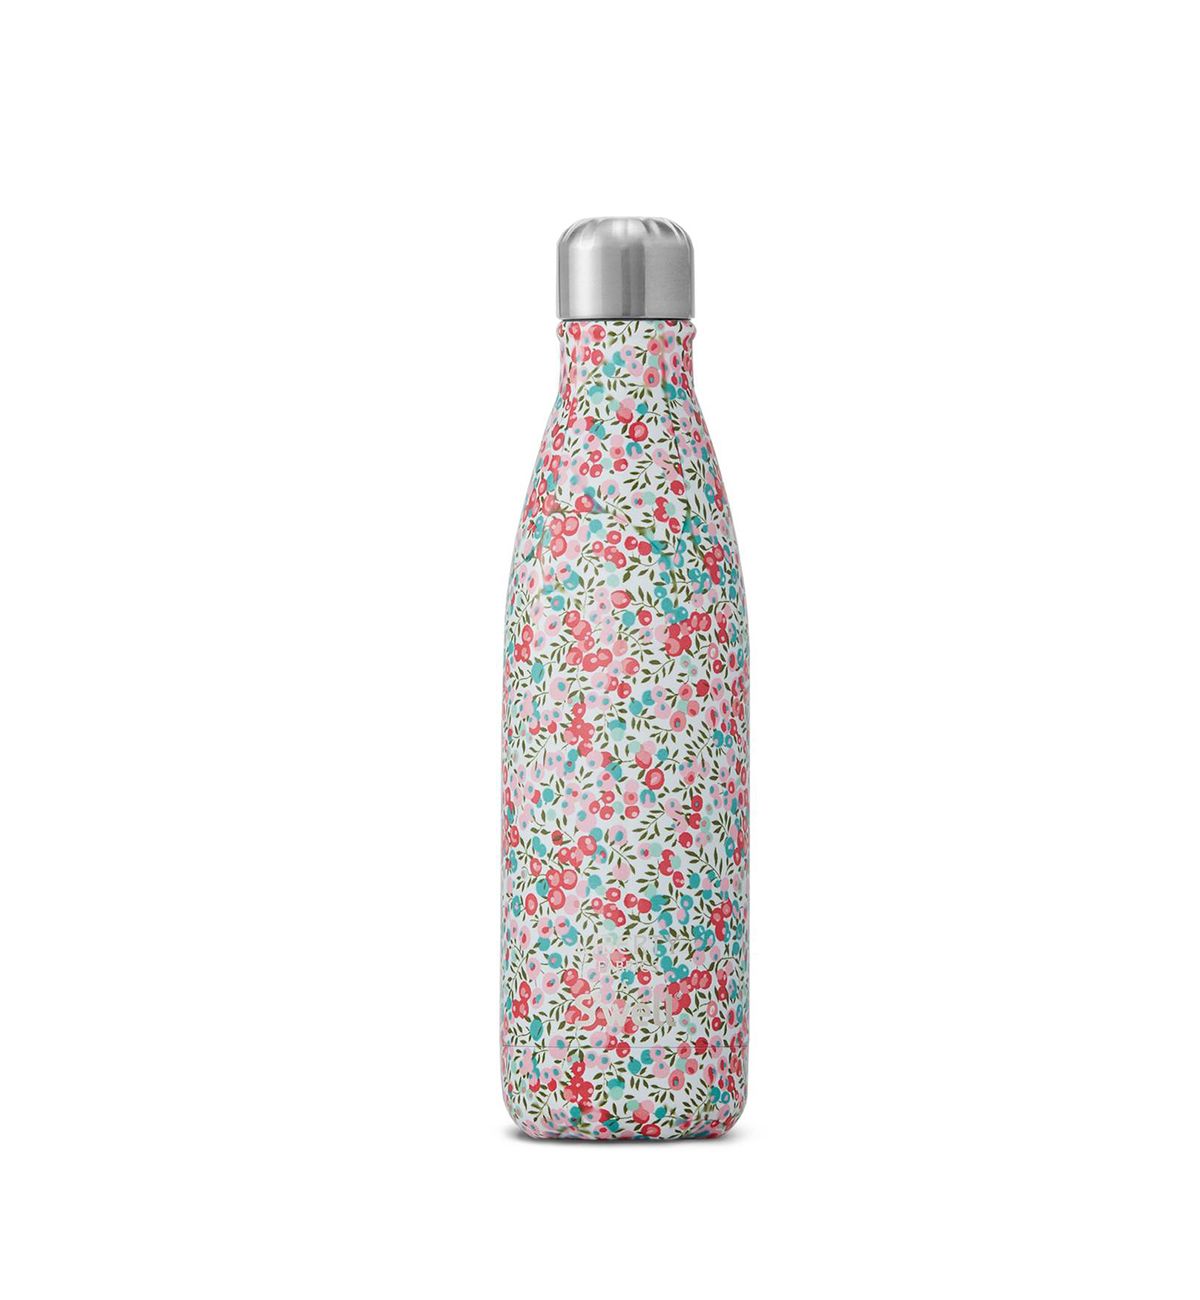 Beste vannflasker, Liberty Fabrics Wiltshire rustfritt stål vannflaske